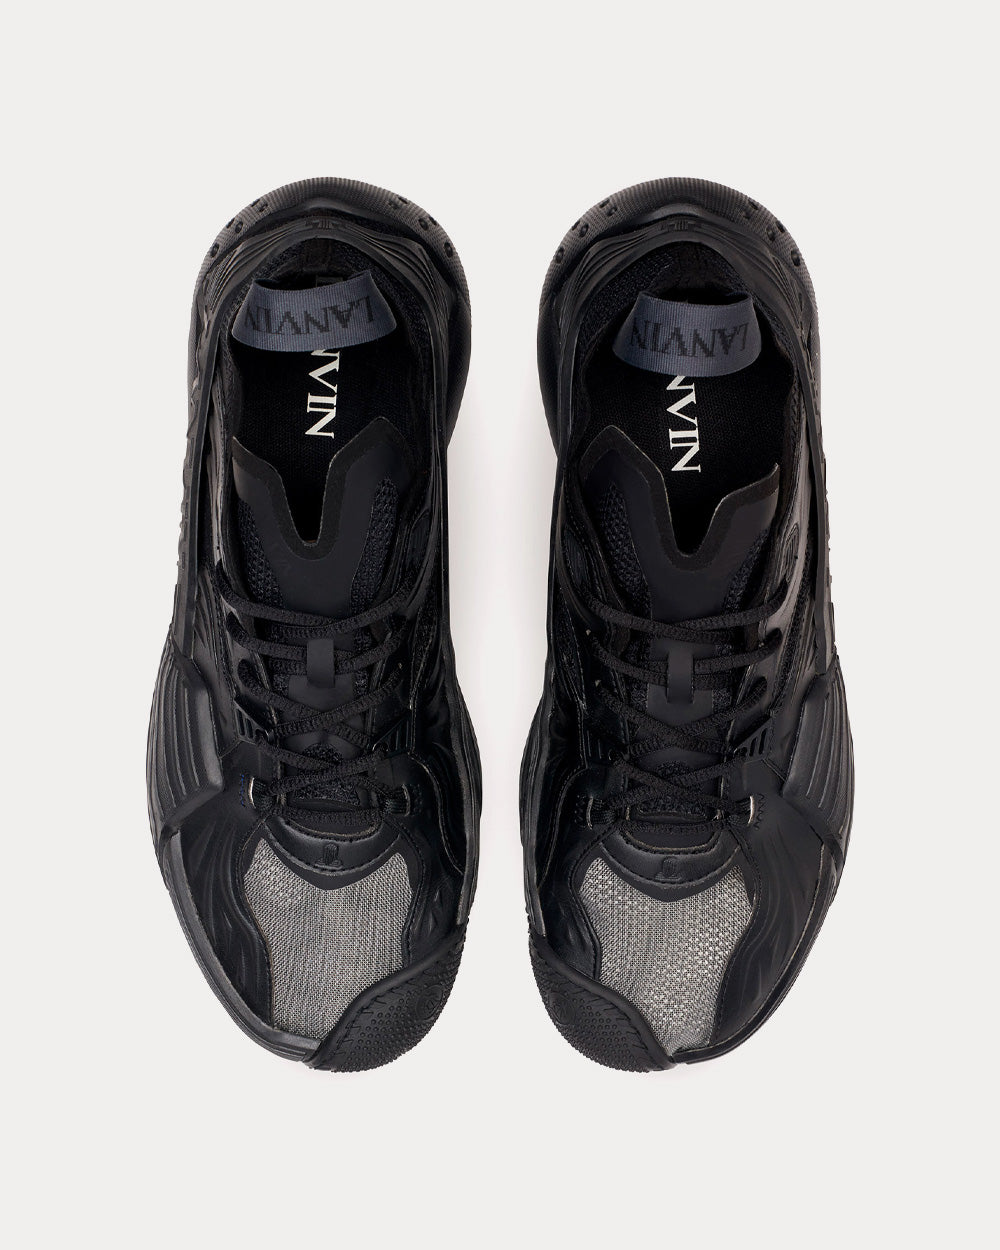 Lanvin - Mesh Flash-X Black Low Top Sneakers